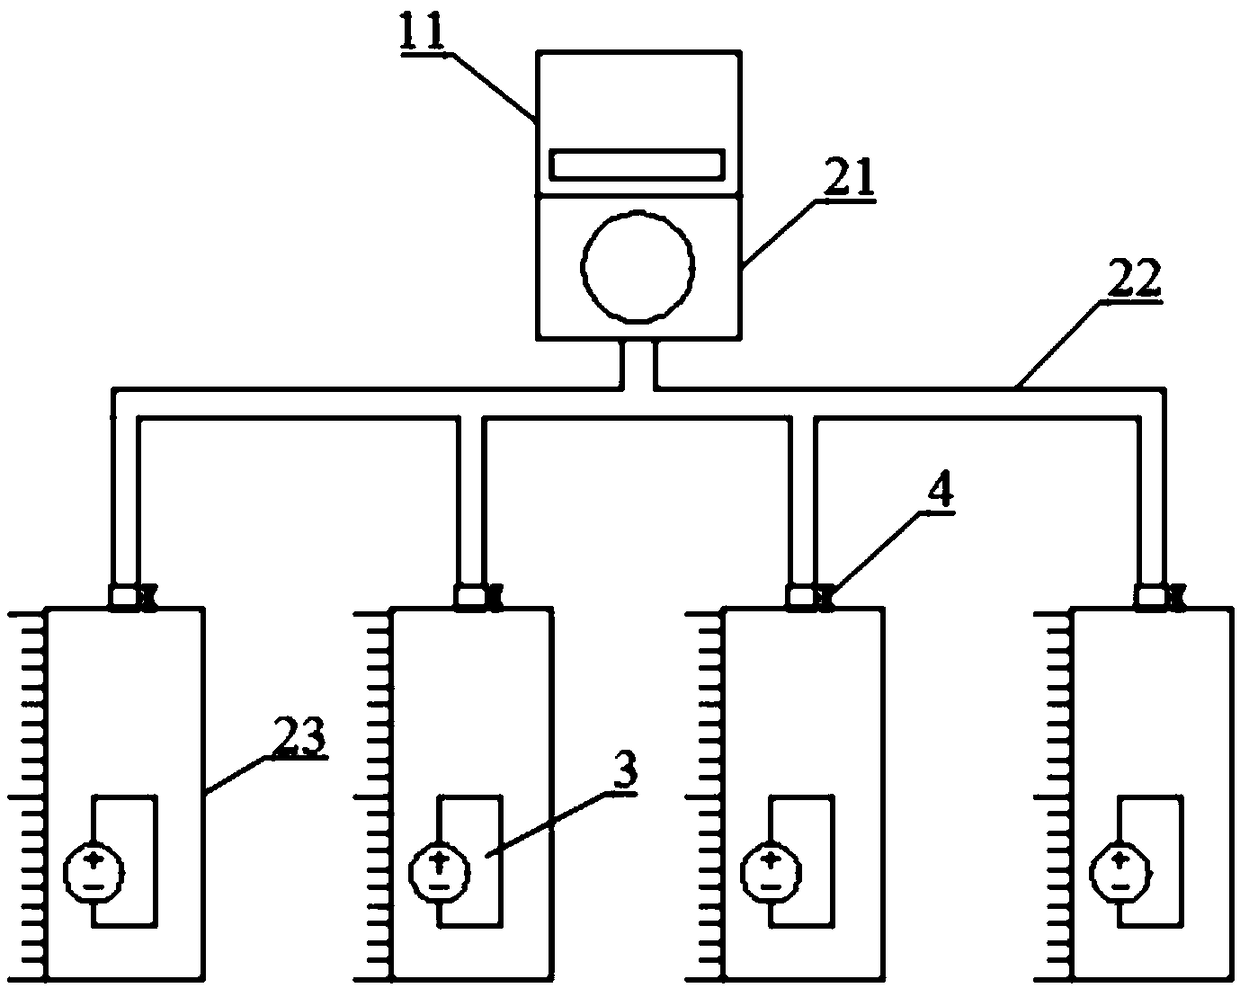 Centralized control oil replenishment system and decentralized oil replenishment method